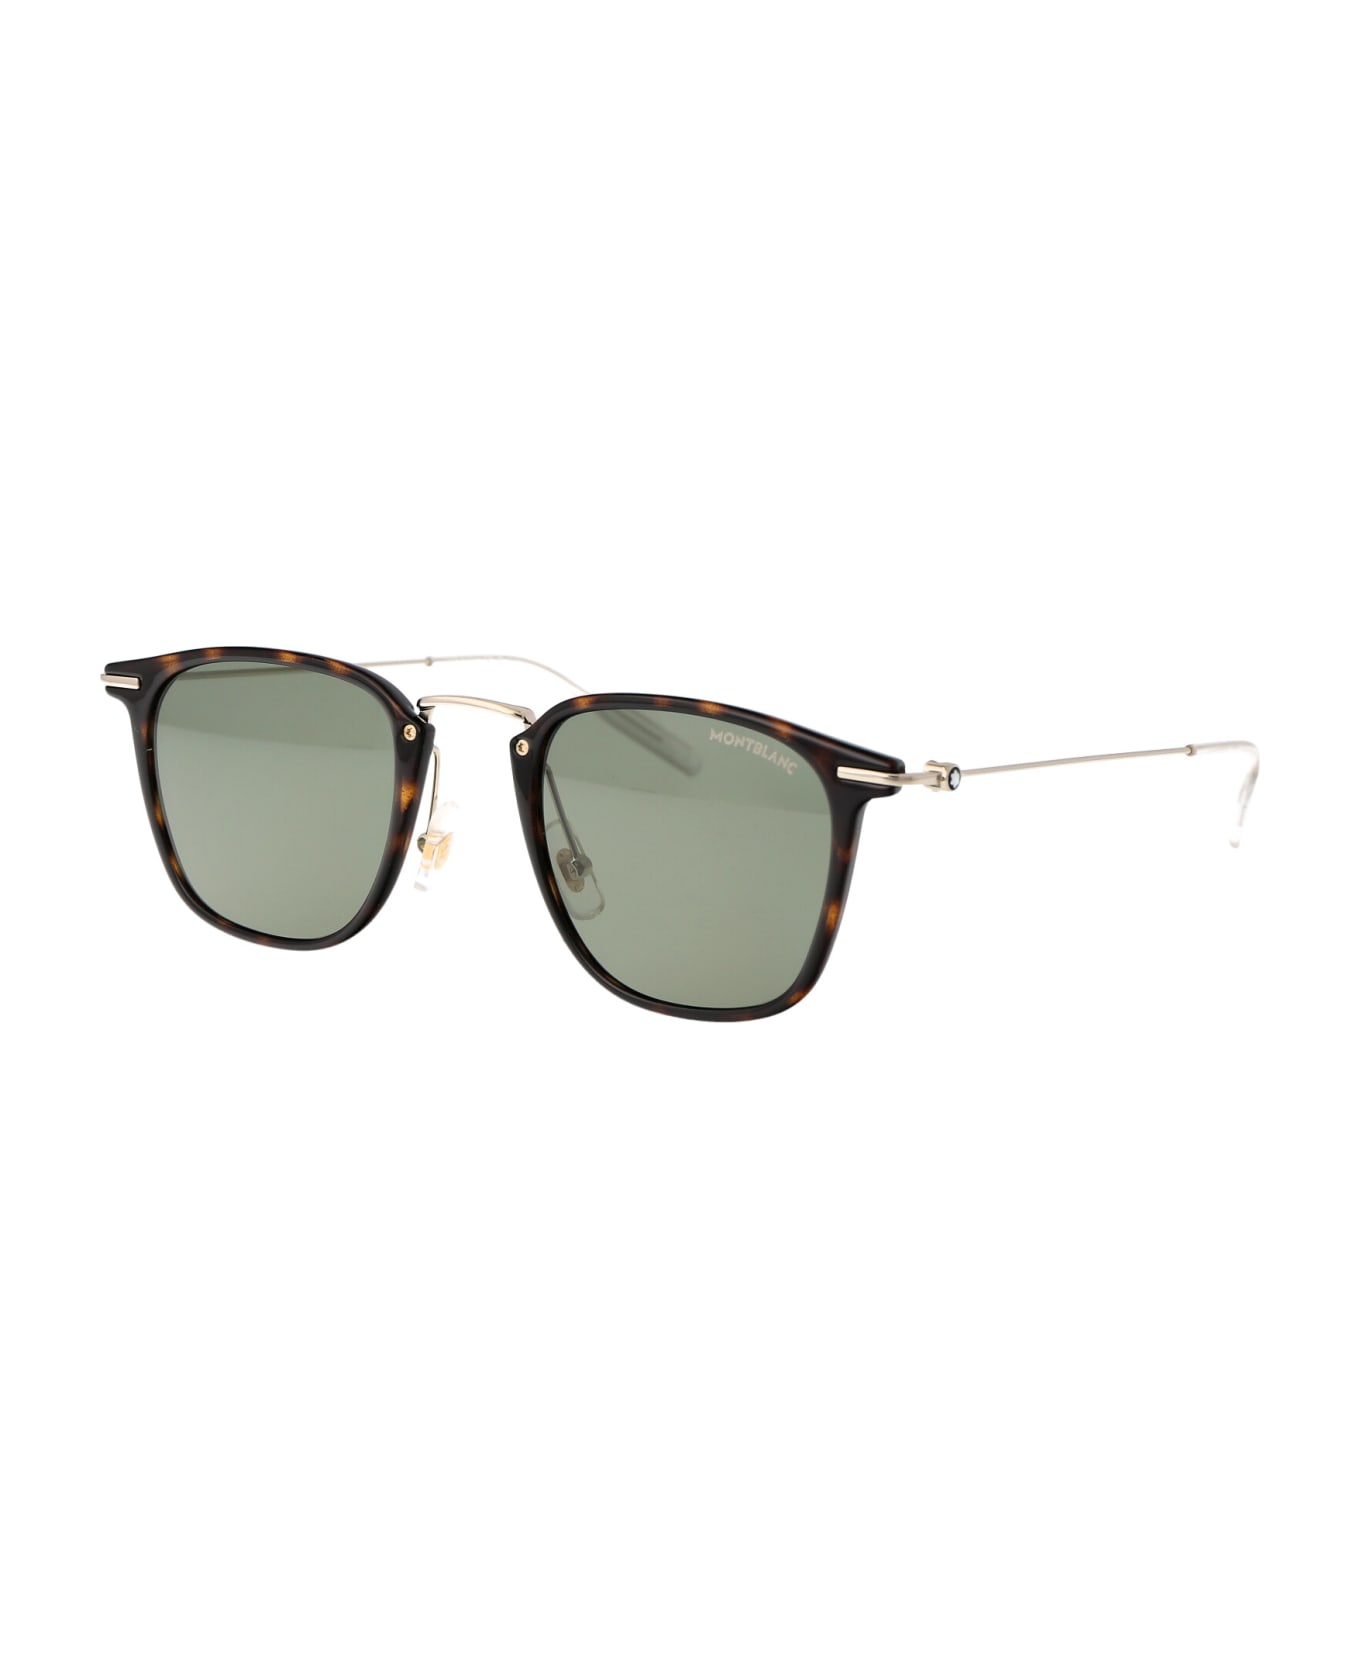 Montblanc Mb0295s Sunglasses - 002 HAVANA GOLD GREEN サングラス